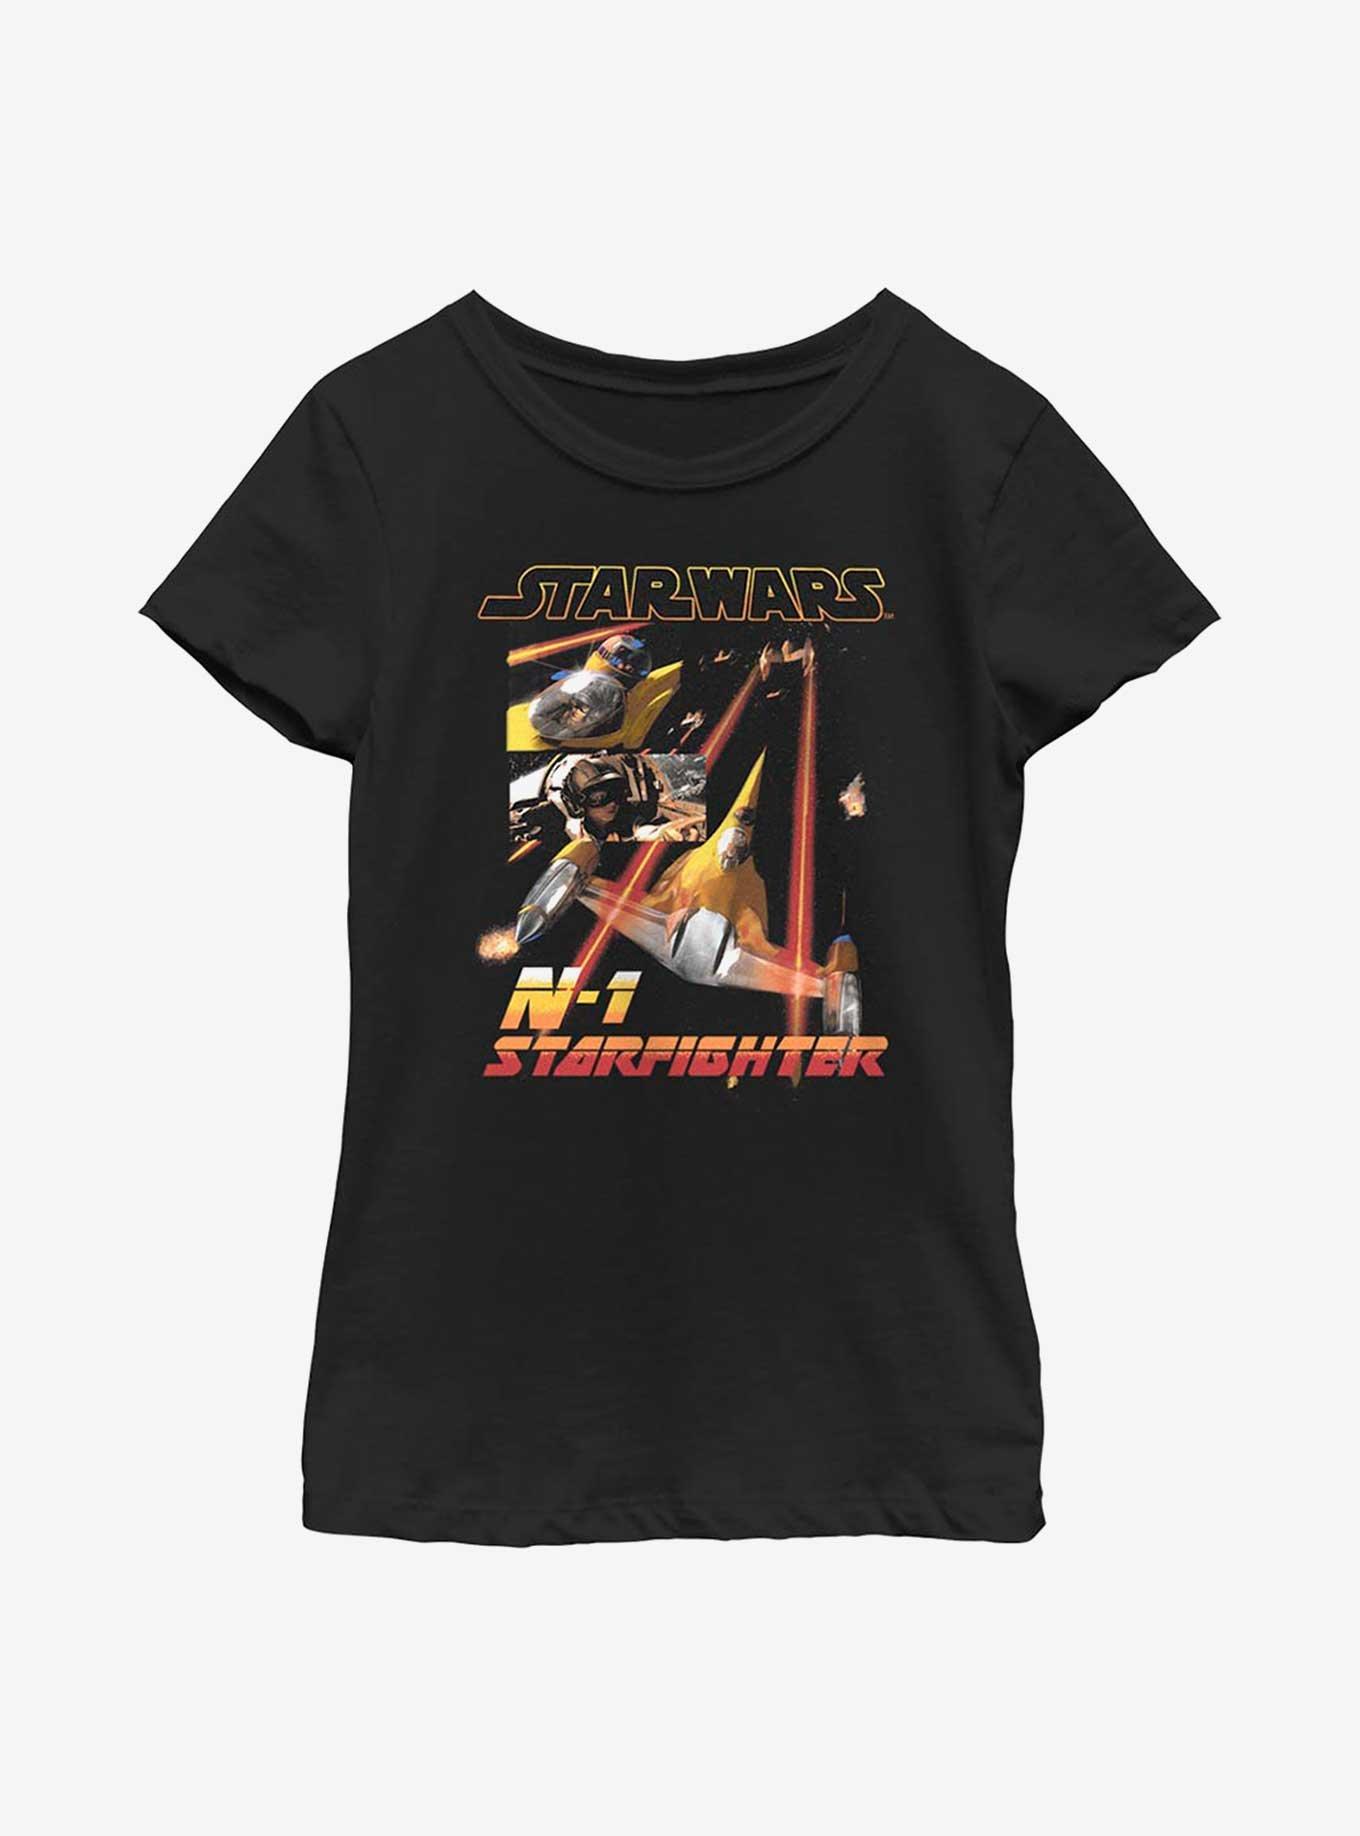 Star Wars The Book Of Boba Fett N-1 Starfighter Youth Girls T-Shirt, BLACK, hi-res